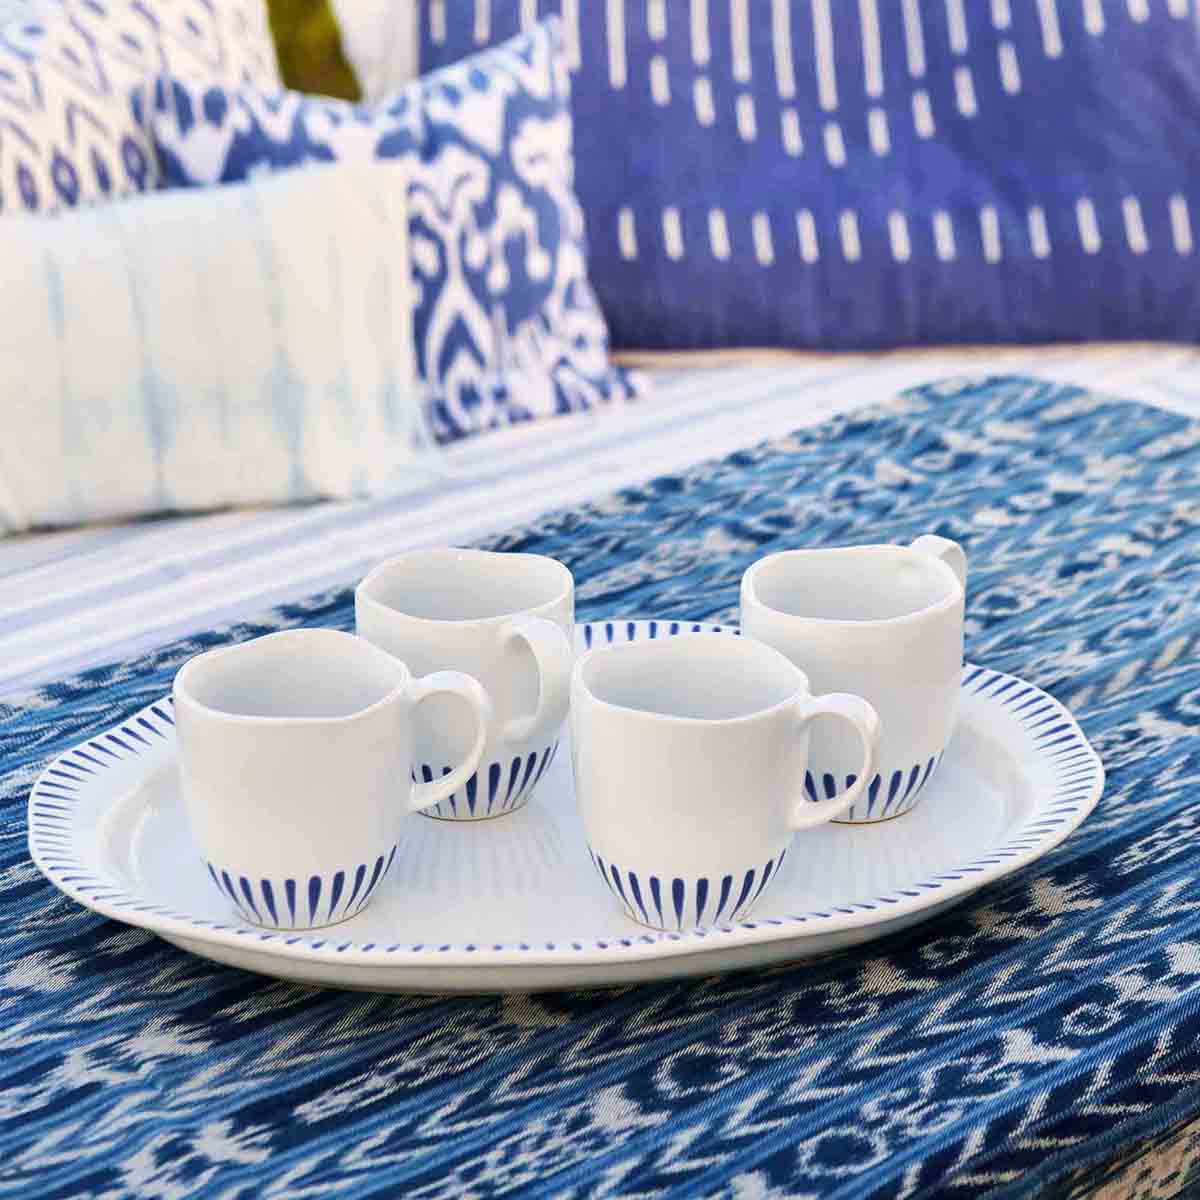 Sitio Stripe Mug - Delft Blue